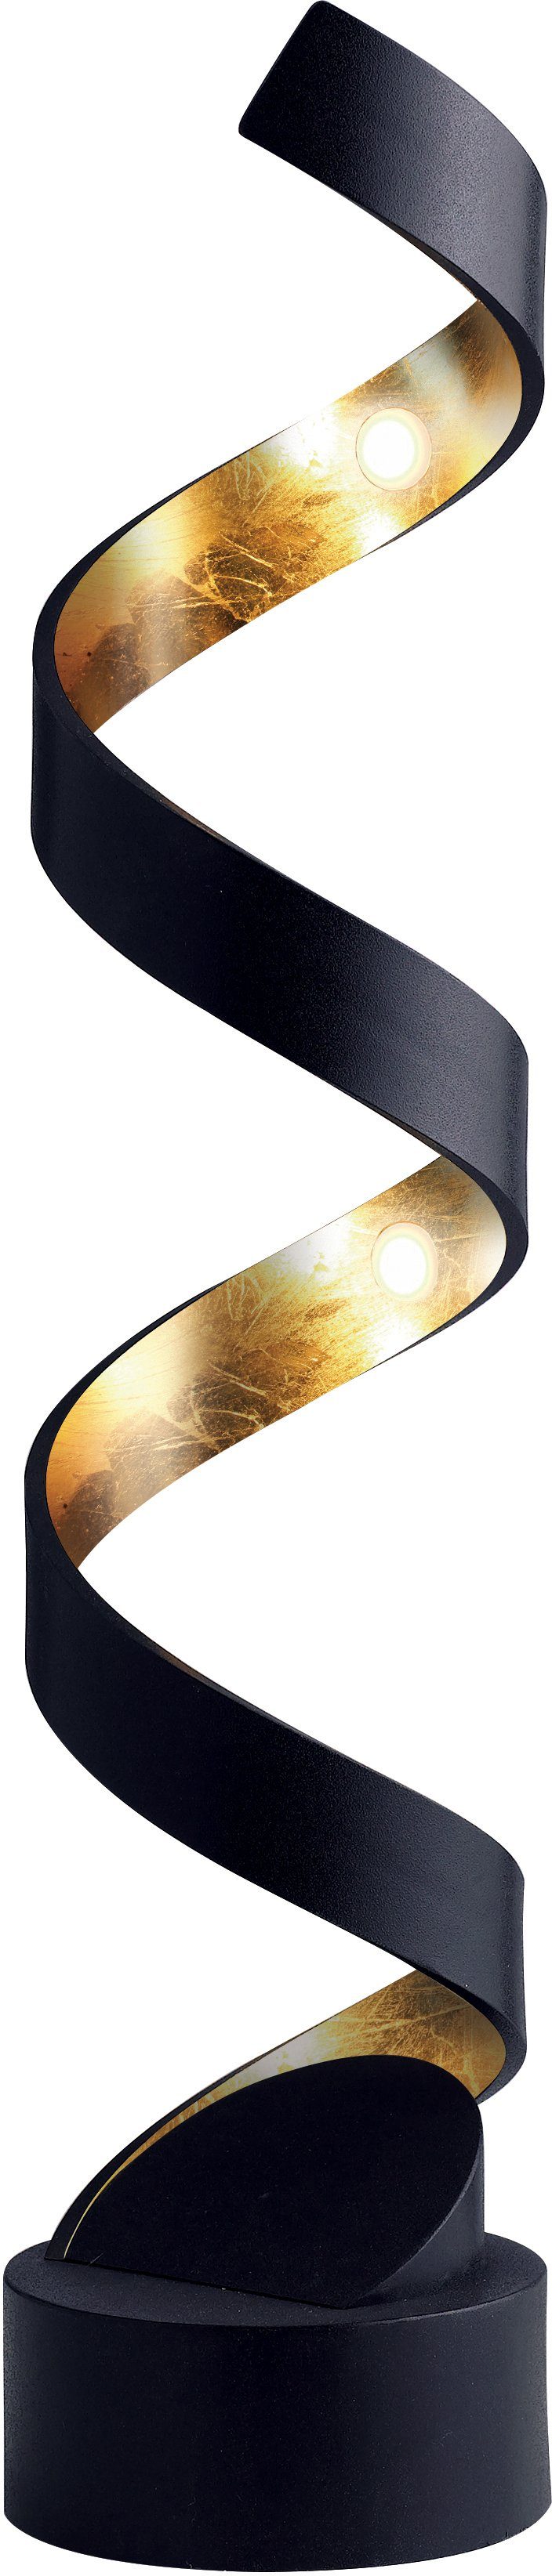 Sonderpreisaktion LUCE Design LED Tischleuchte LED Warmweiß HELIX, fest integriert